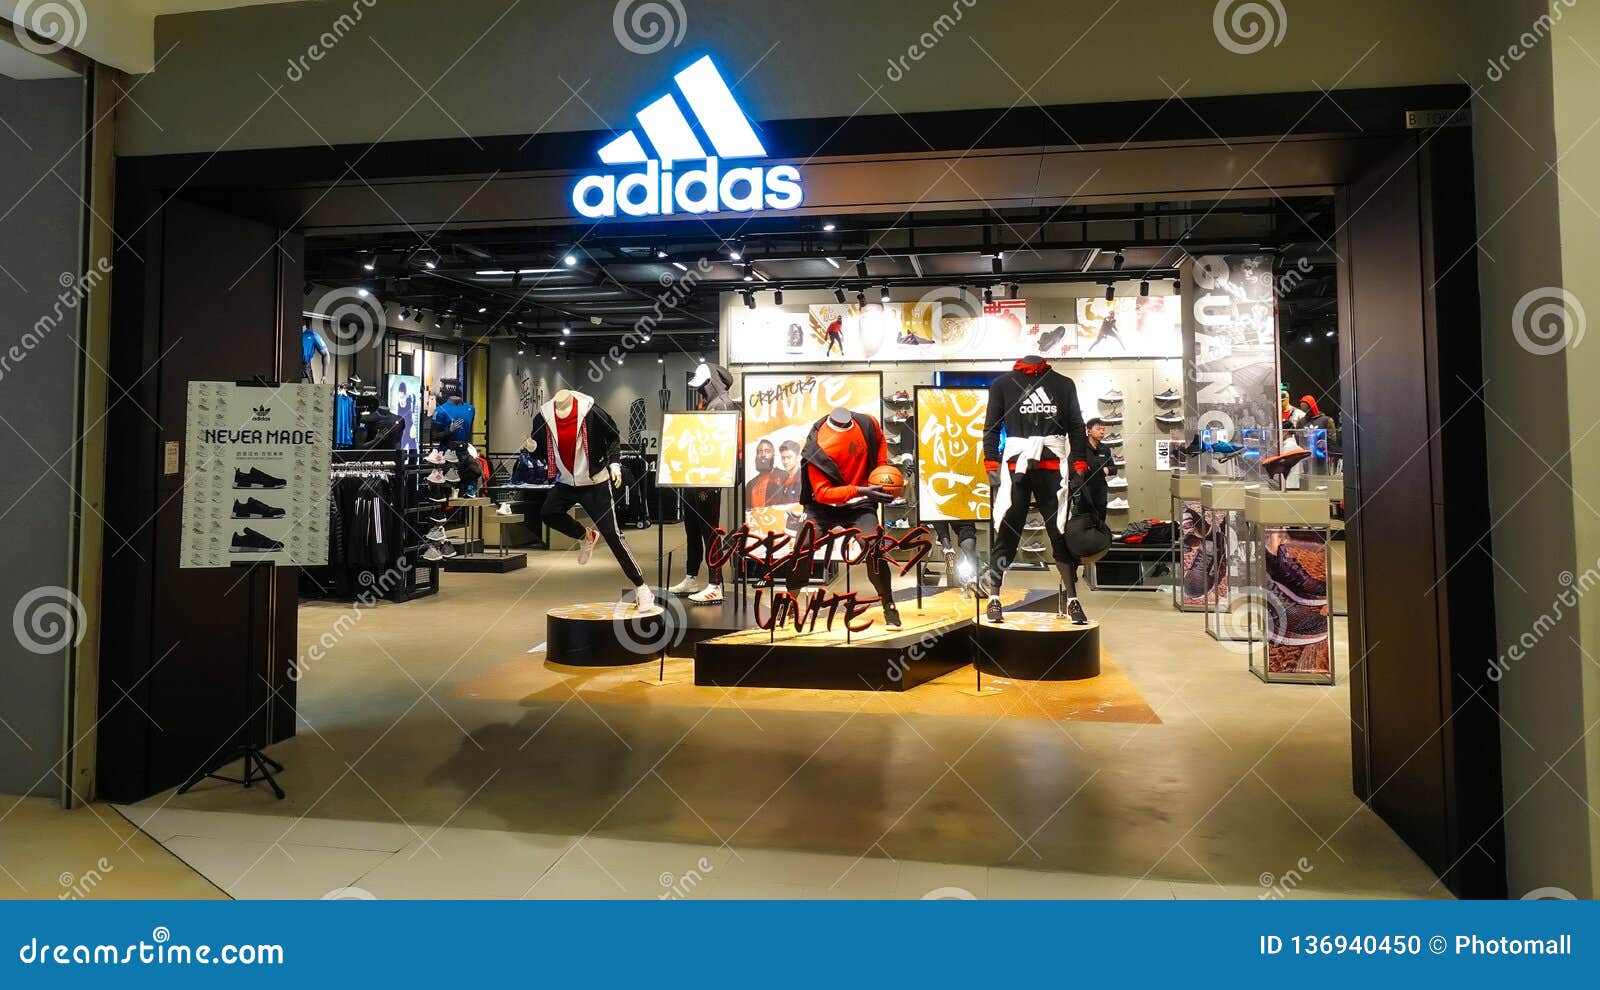 adidas fashion mall